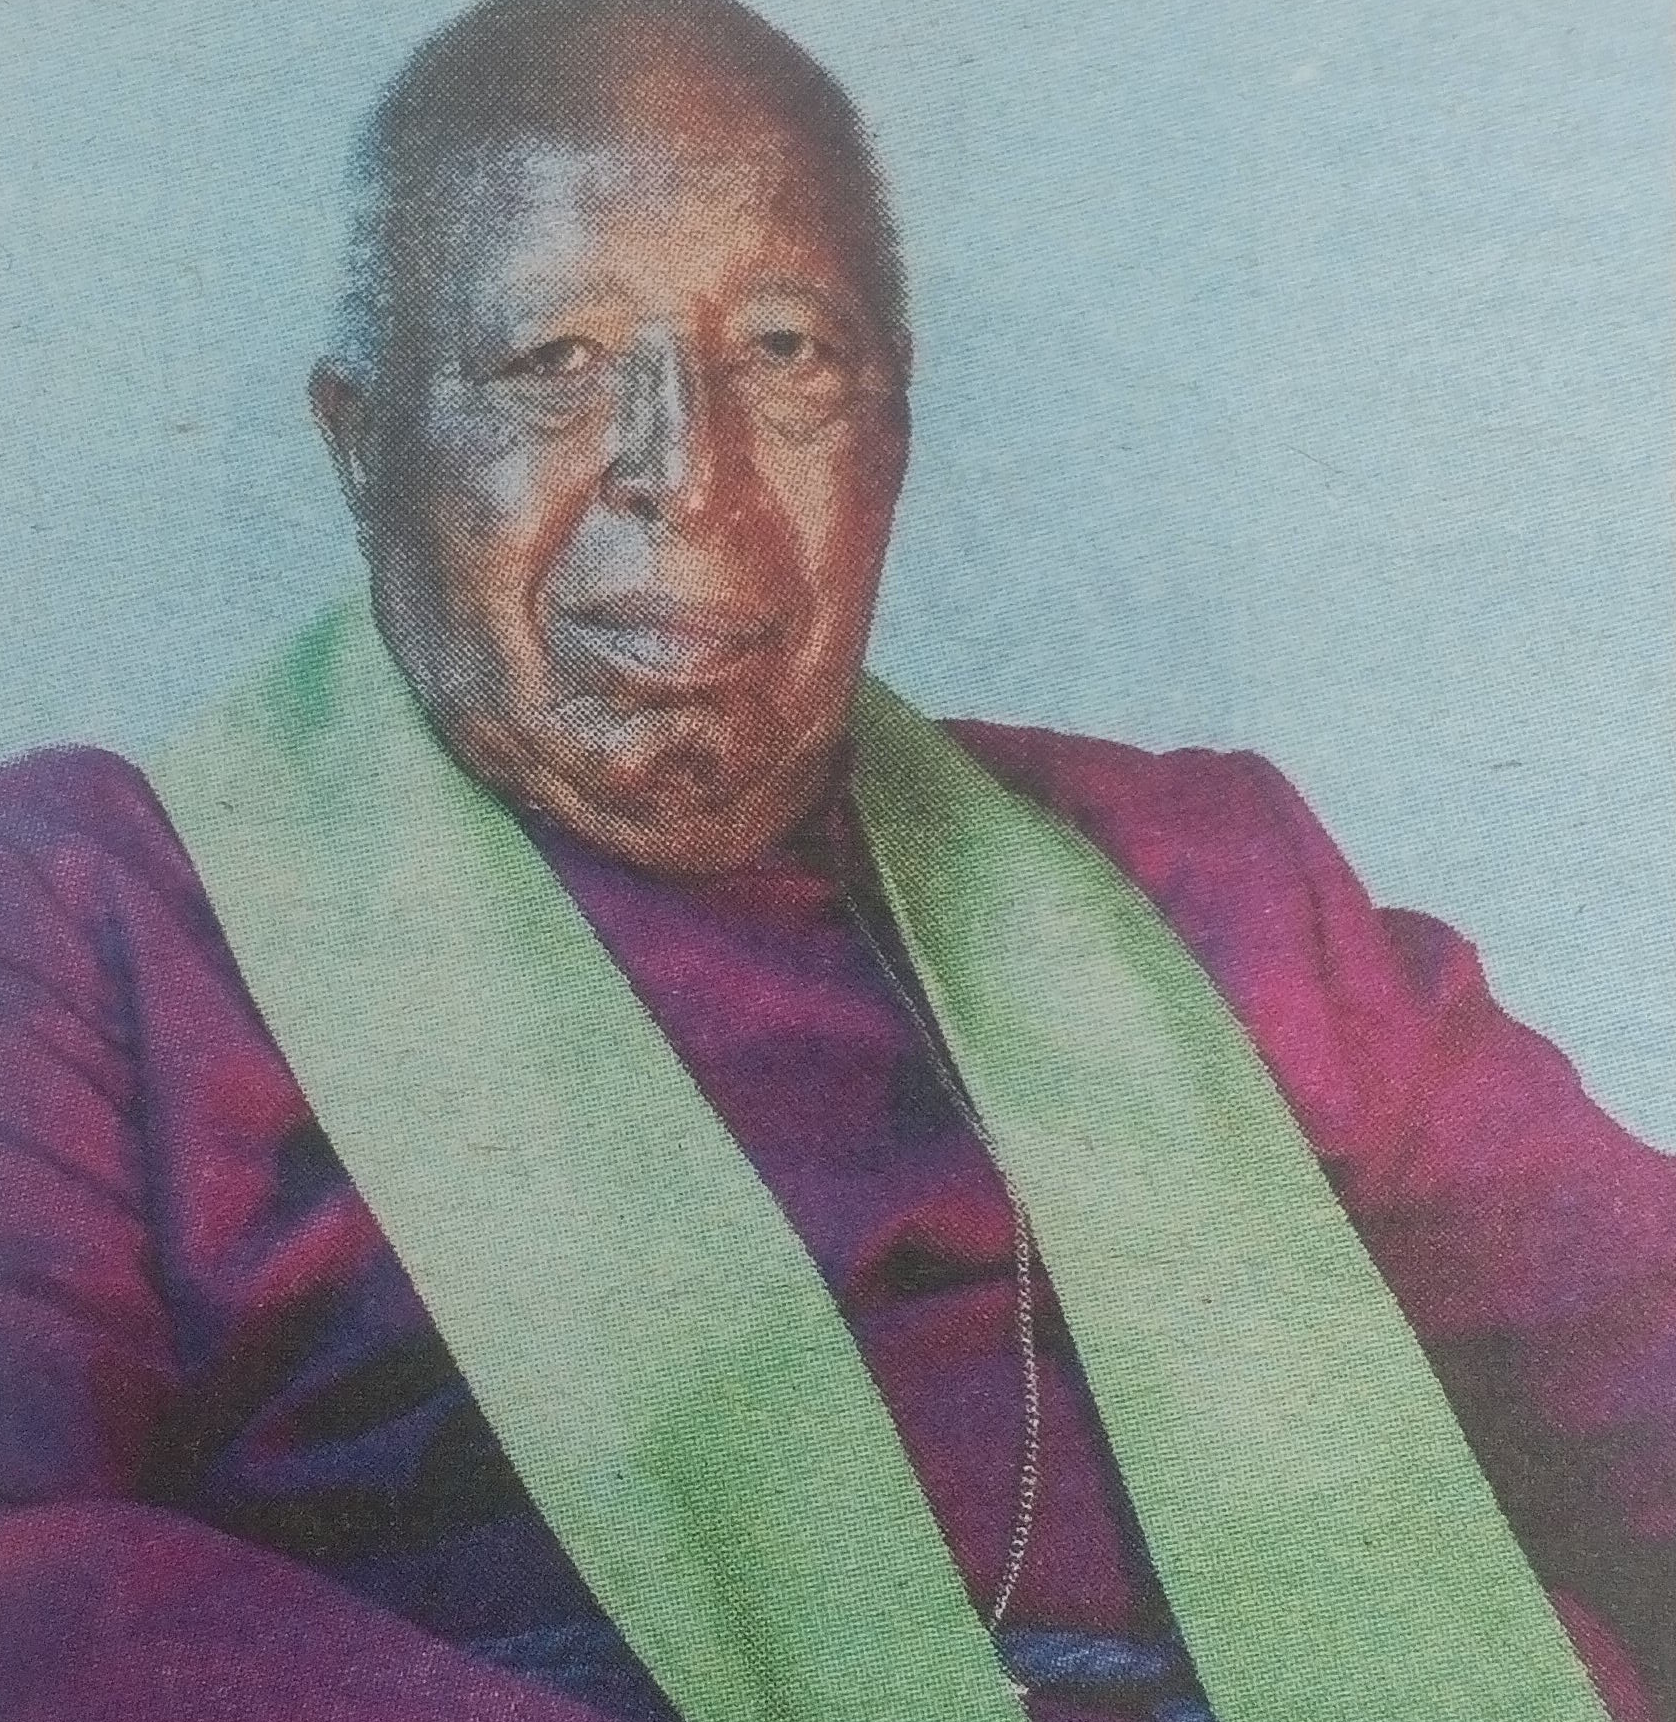 Obituary Image of The Very Rev. Dr. John Gachango Gatu